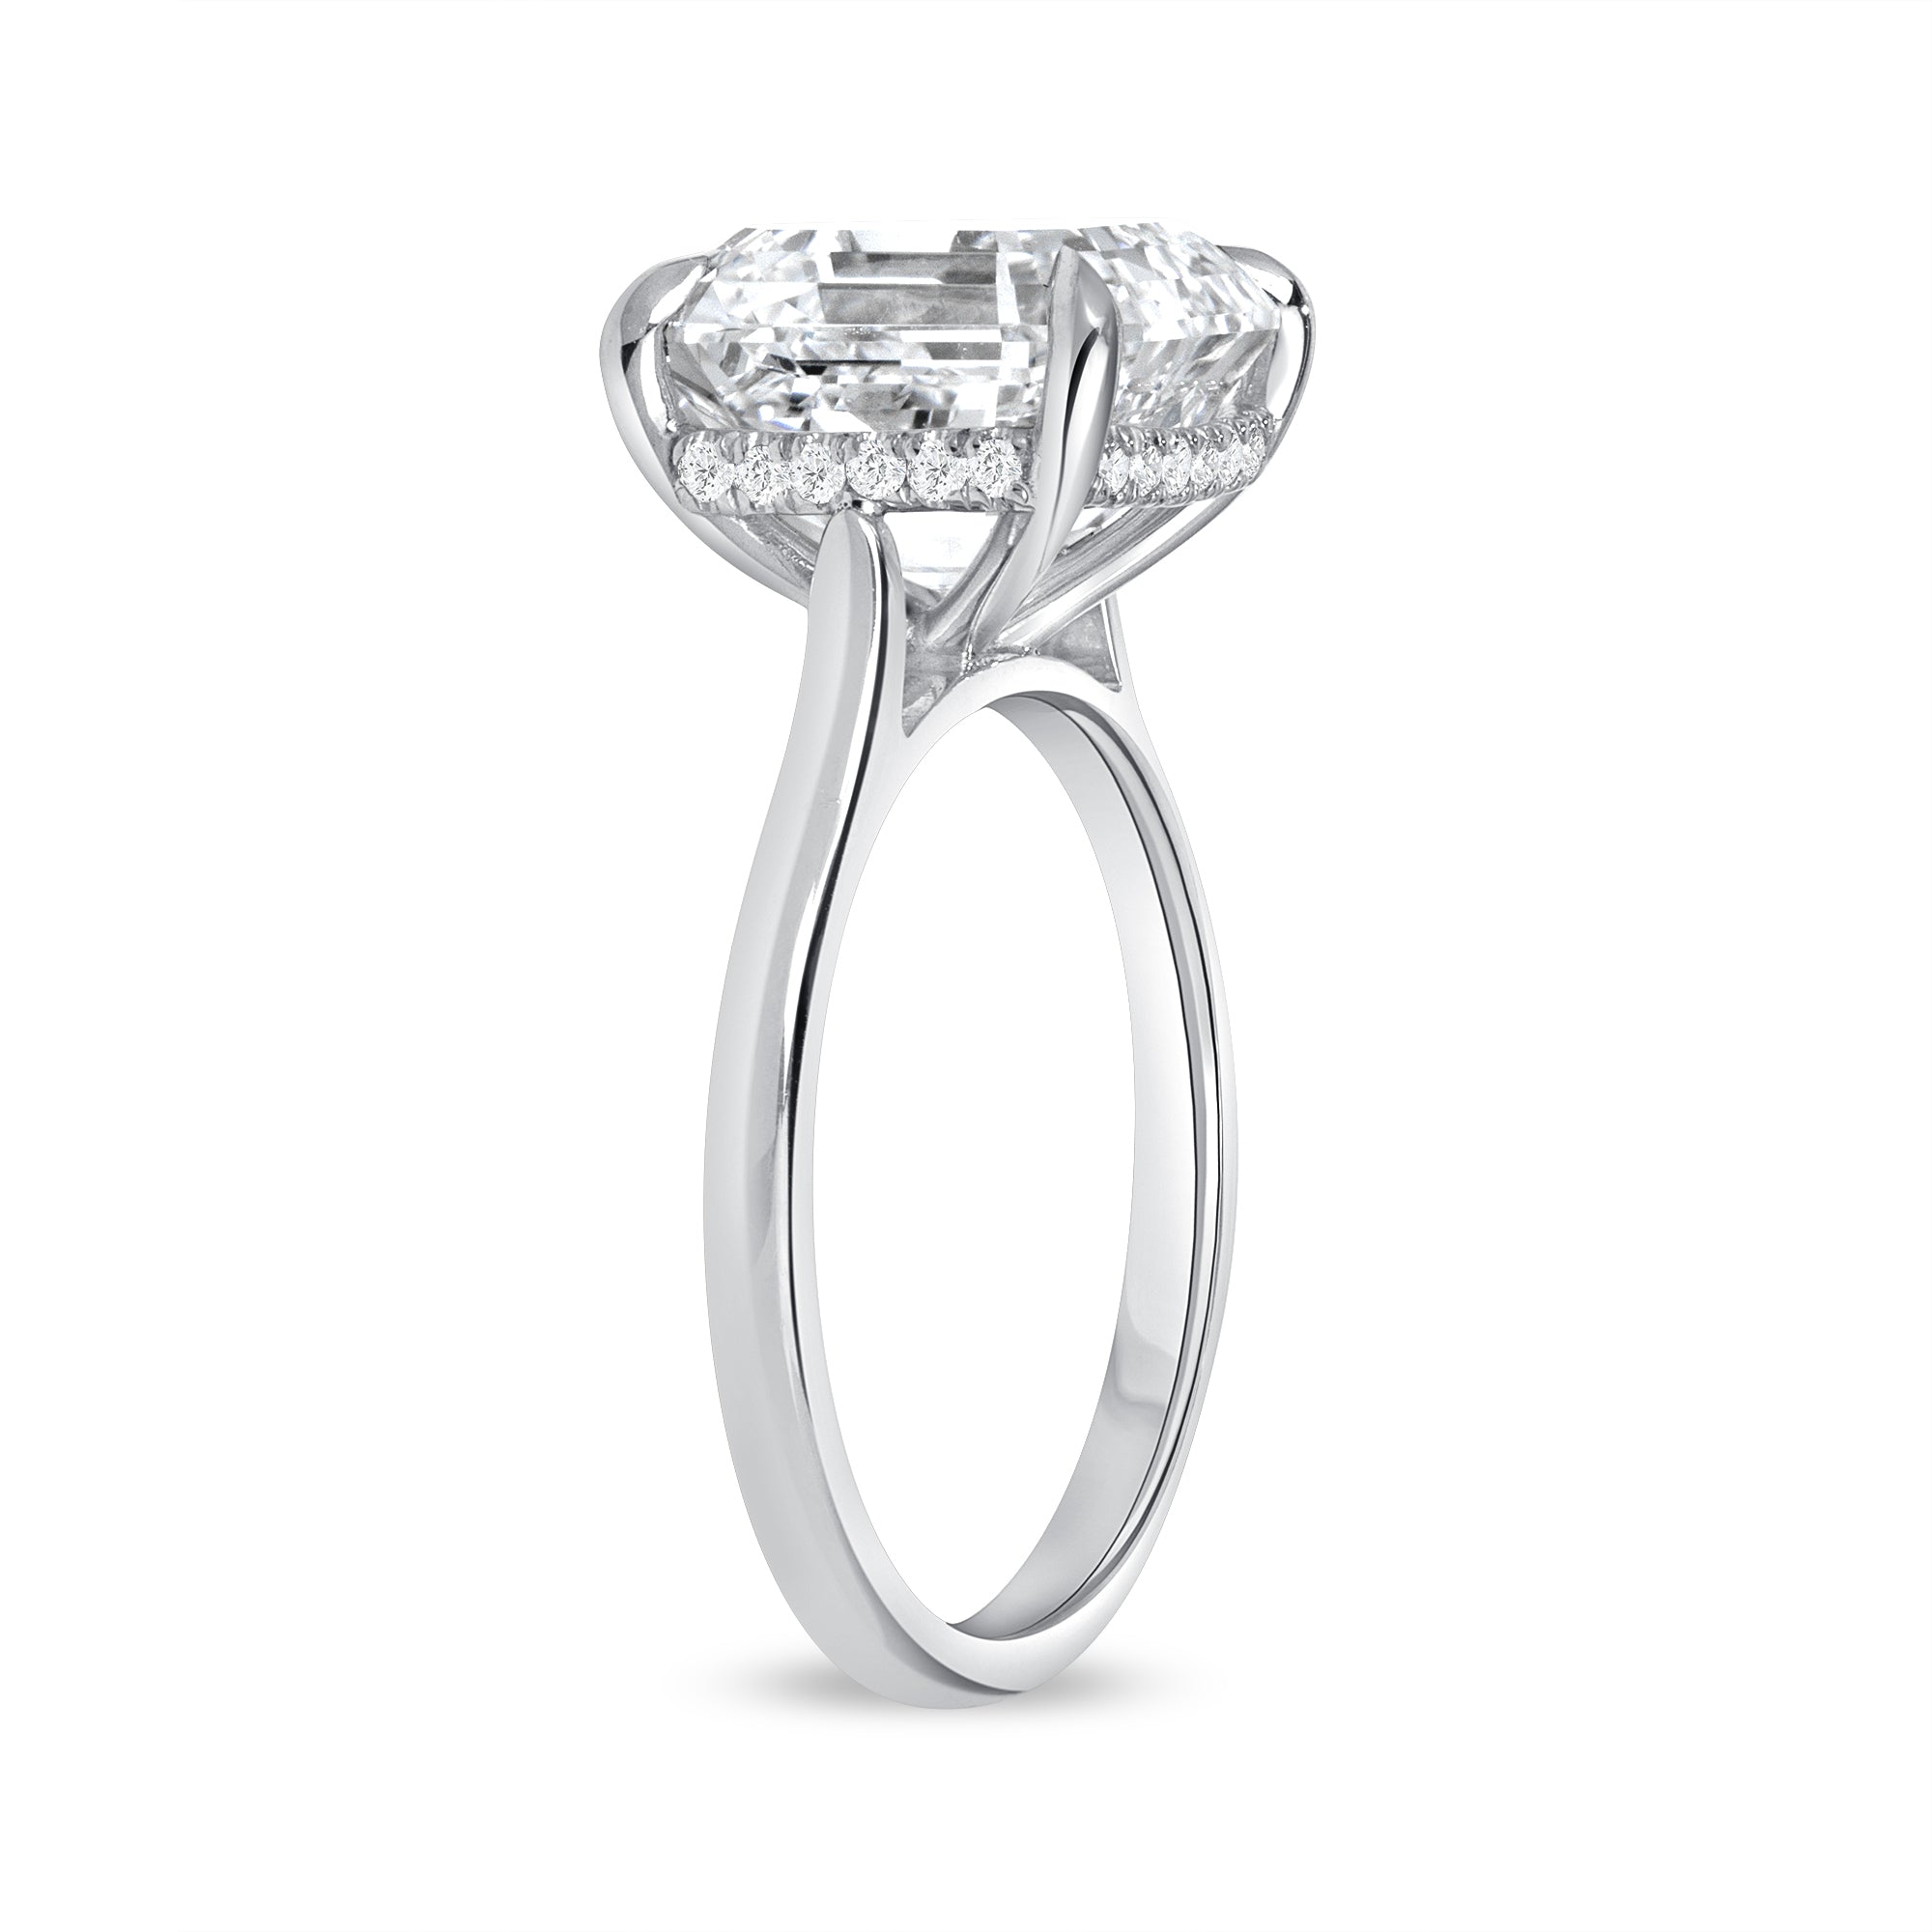 6.01ct Asscher Cut Diamond Hidden Halo Ring in Platinum Band, GIA Certified